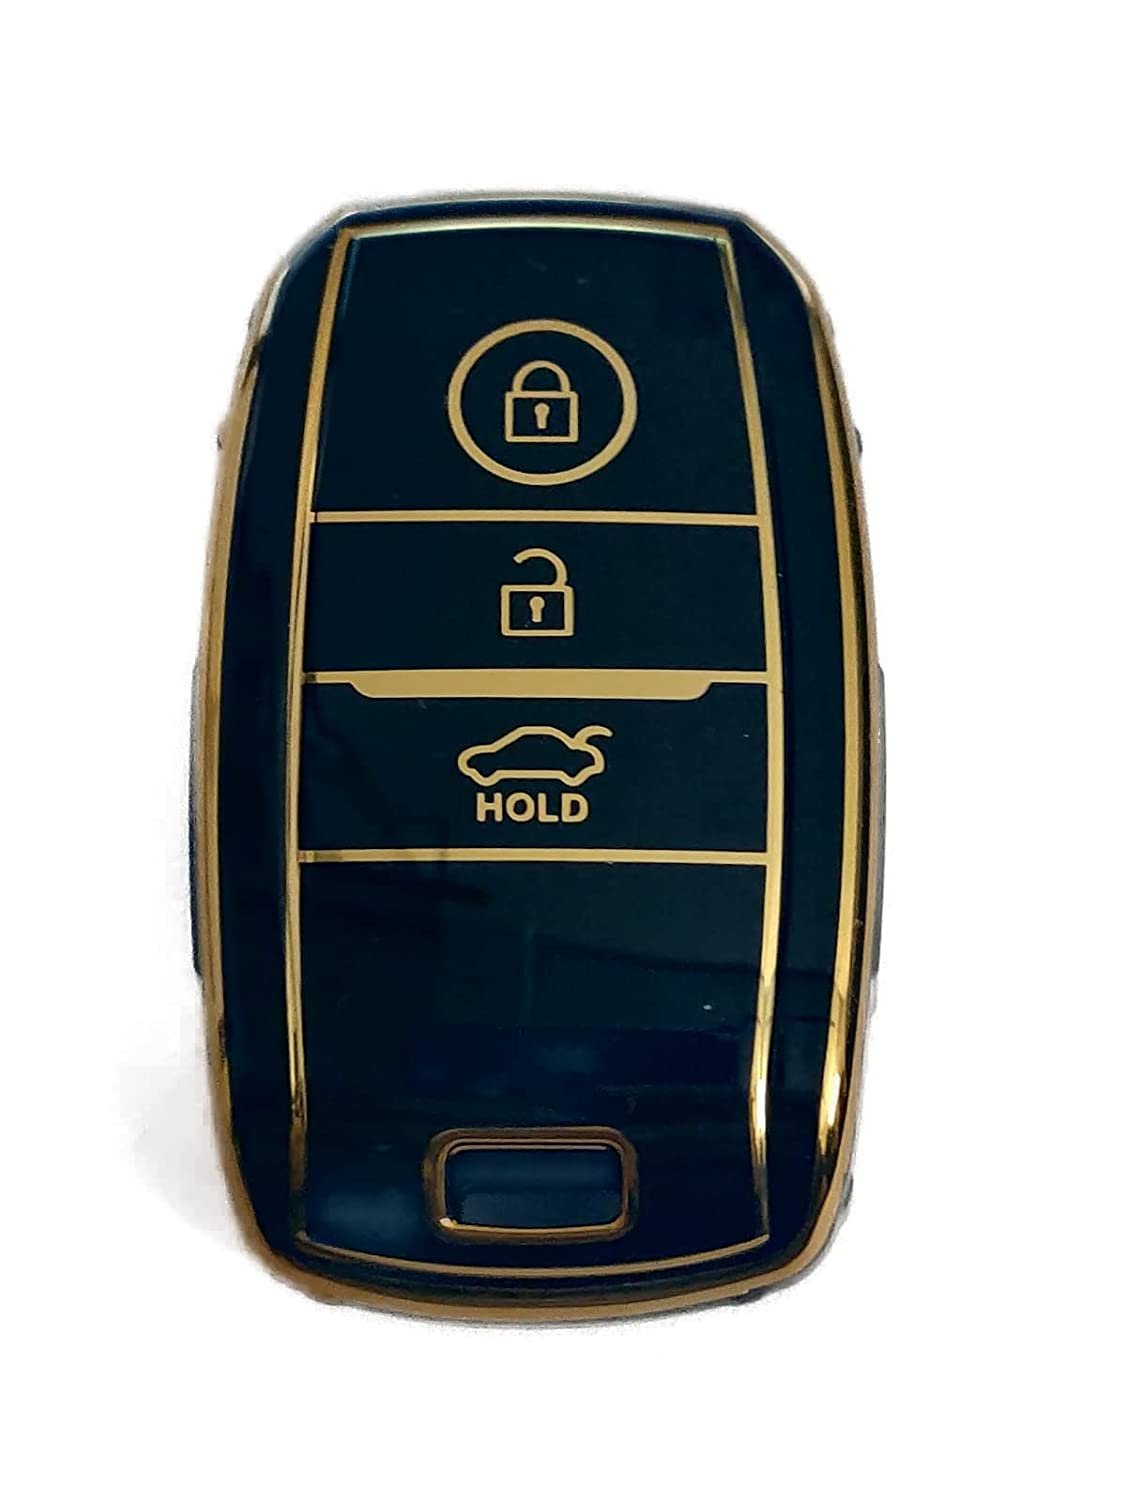 TPU Carbon Fiber Style Car Key Cover Compatible with Kia Seltos 3 Button Smart Key (Gold/Black) Image 